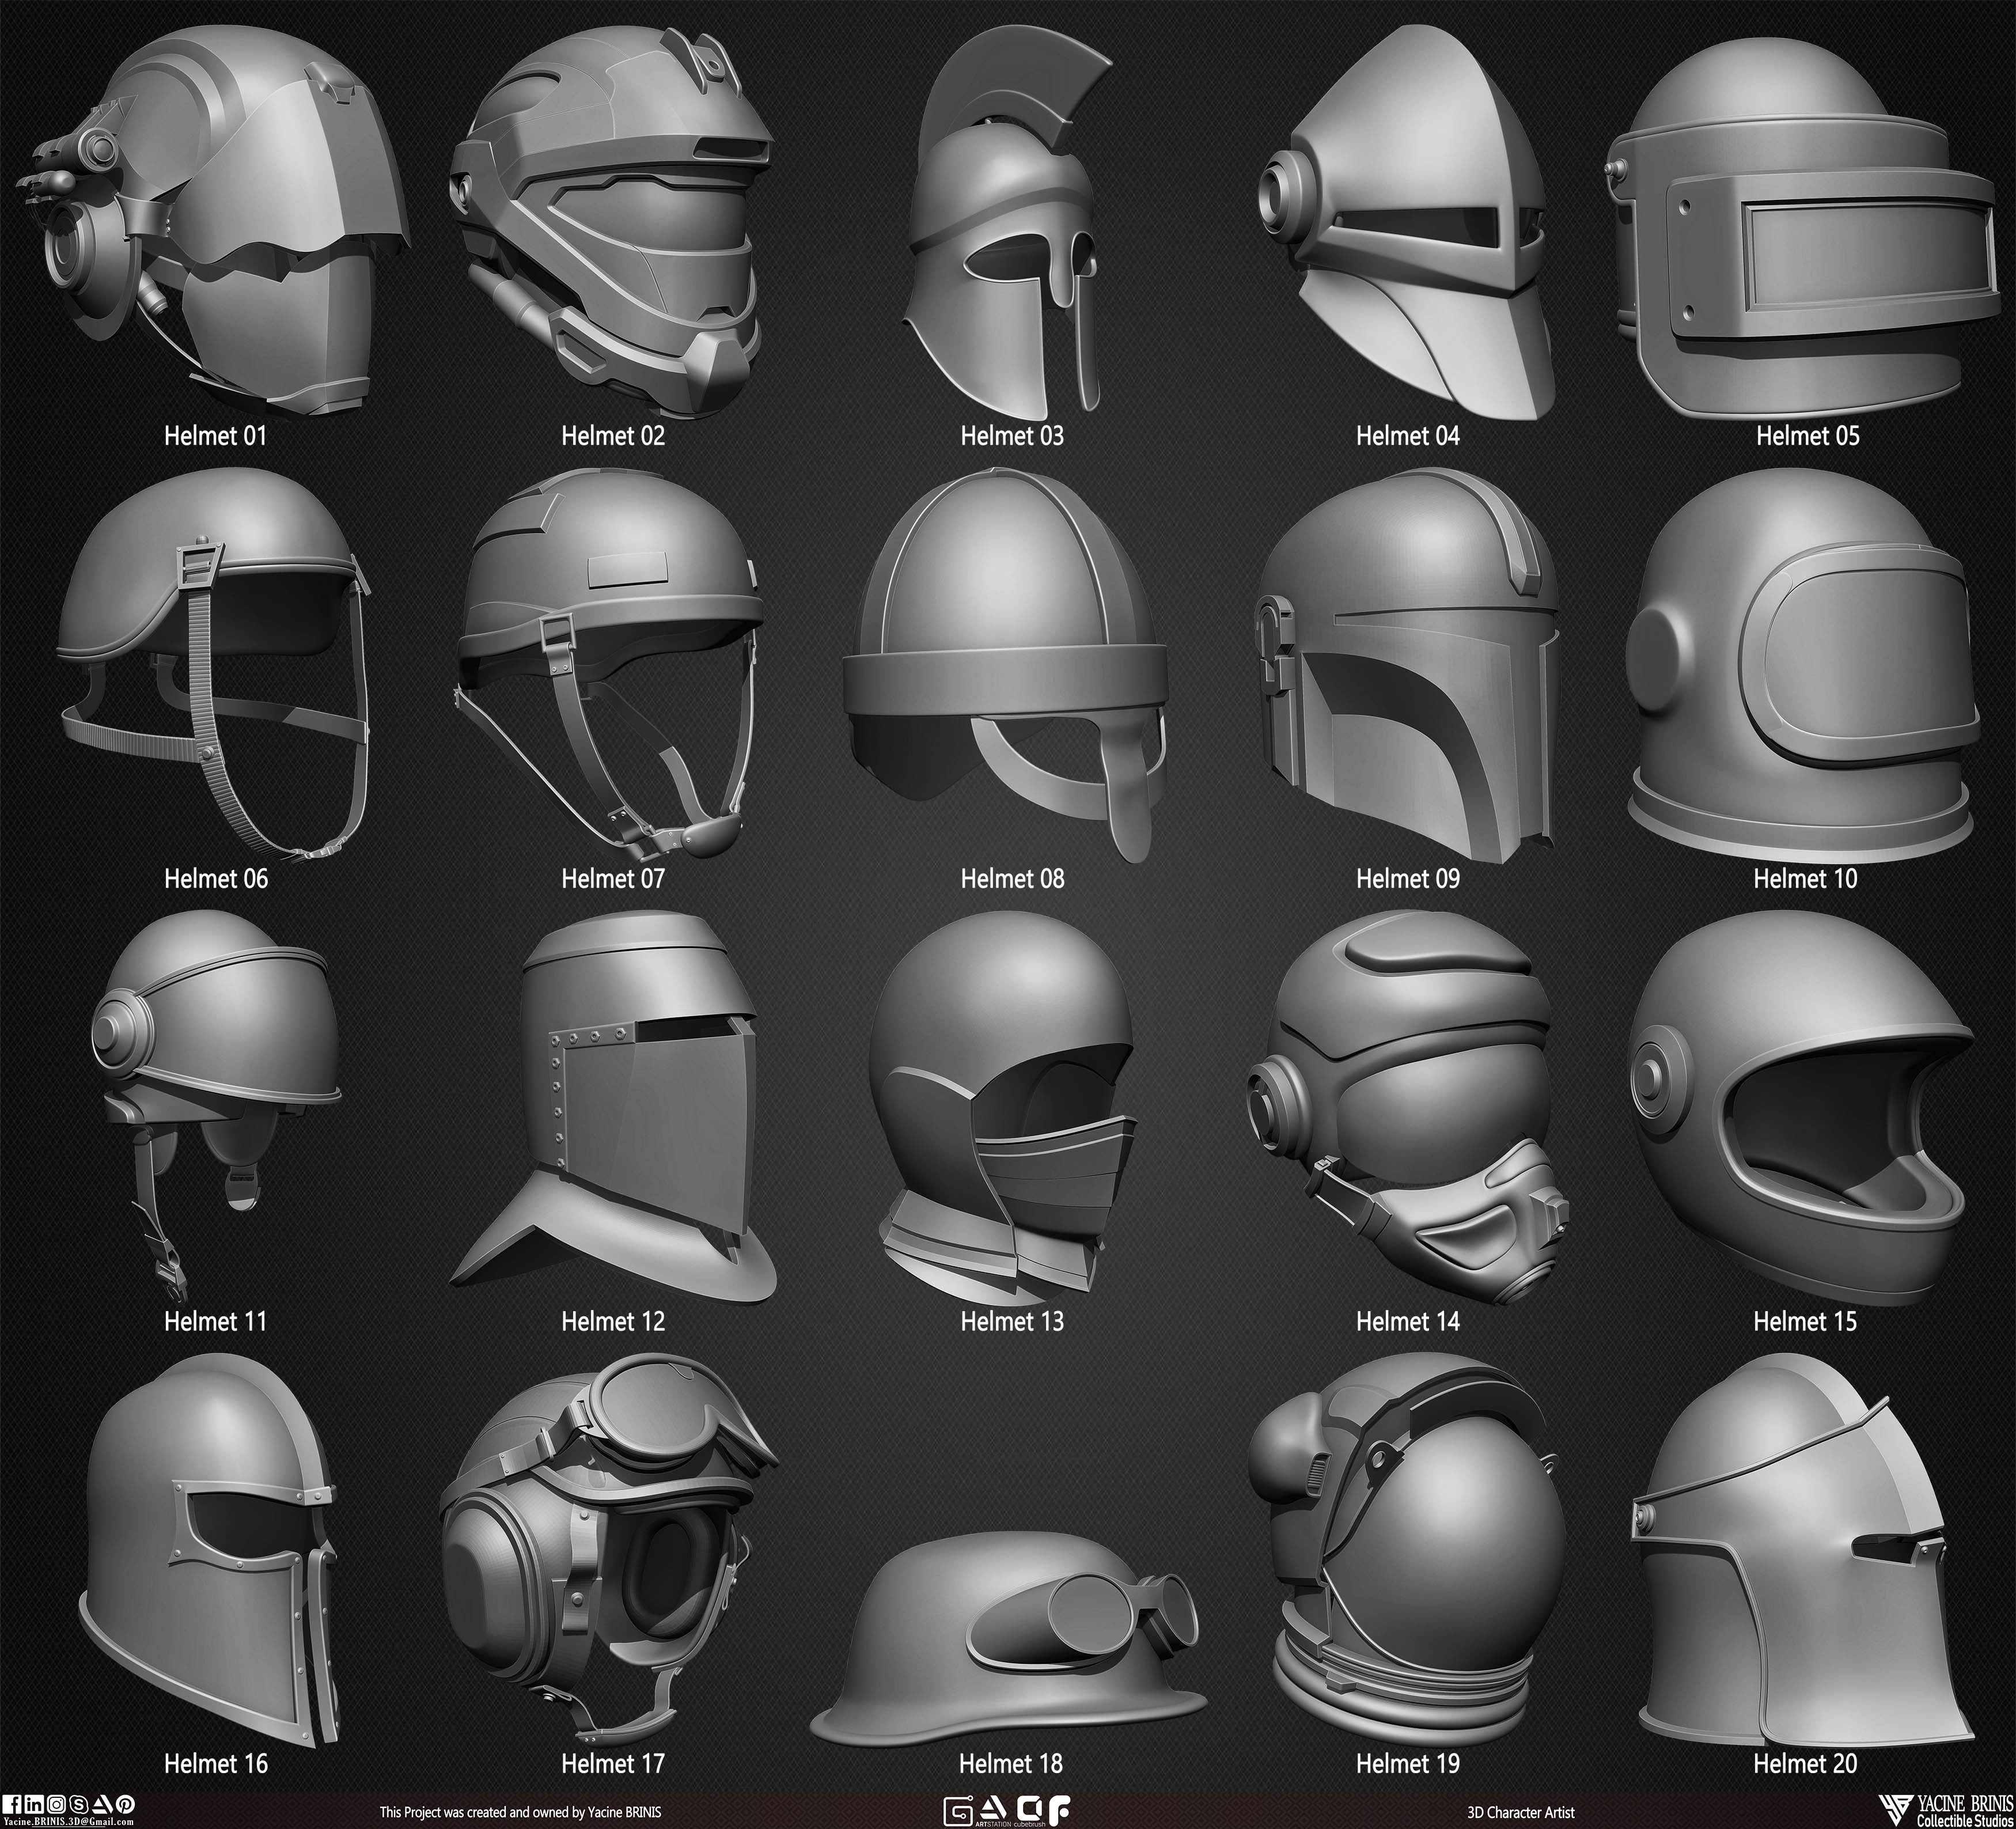 Pack of 20 Helmets Kitbash sculpted by Yacine BRINIS Vol 01 set 002